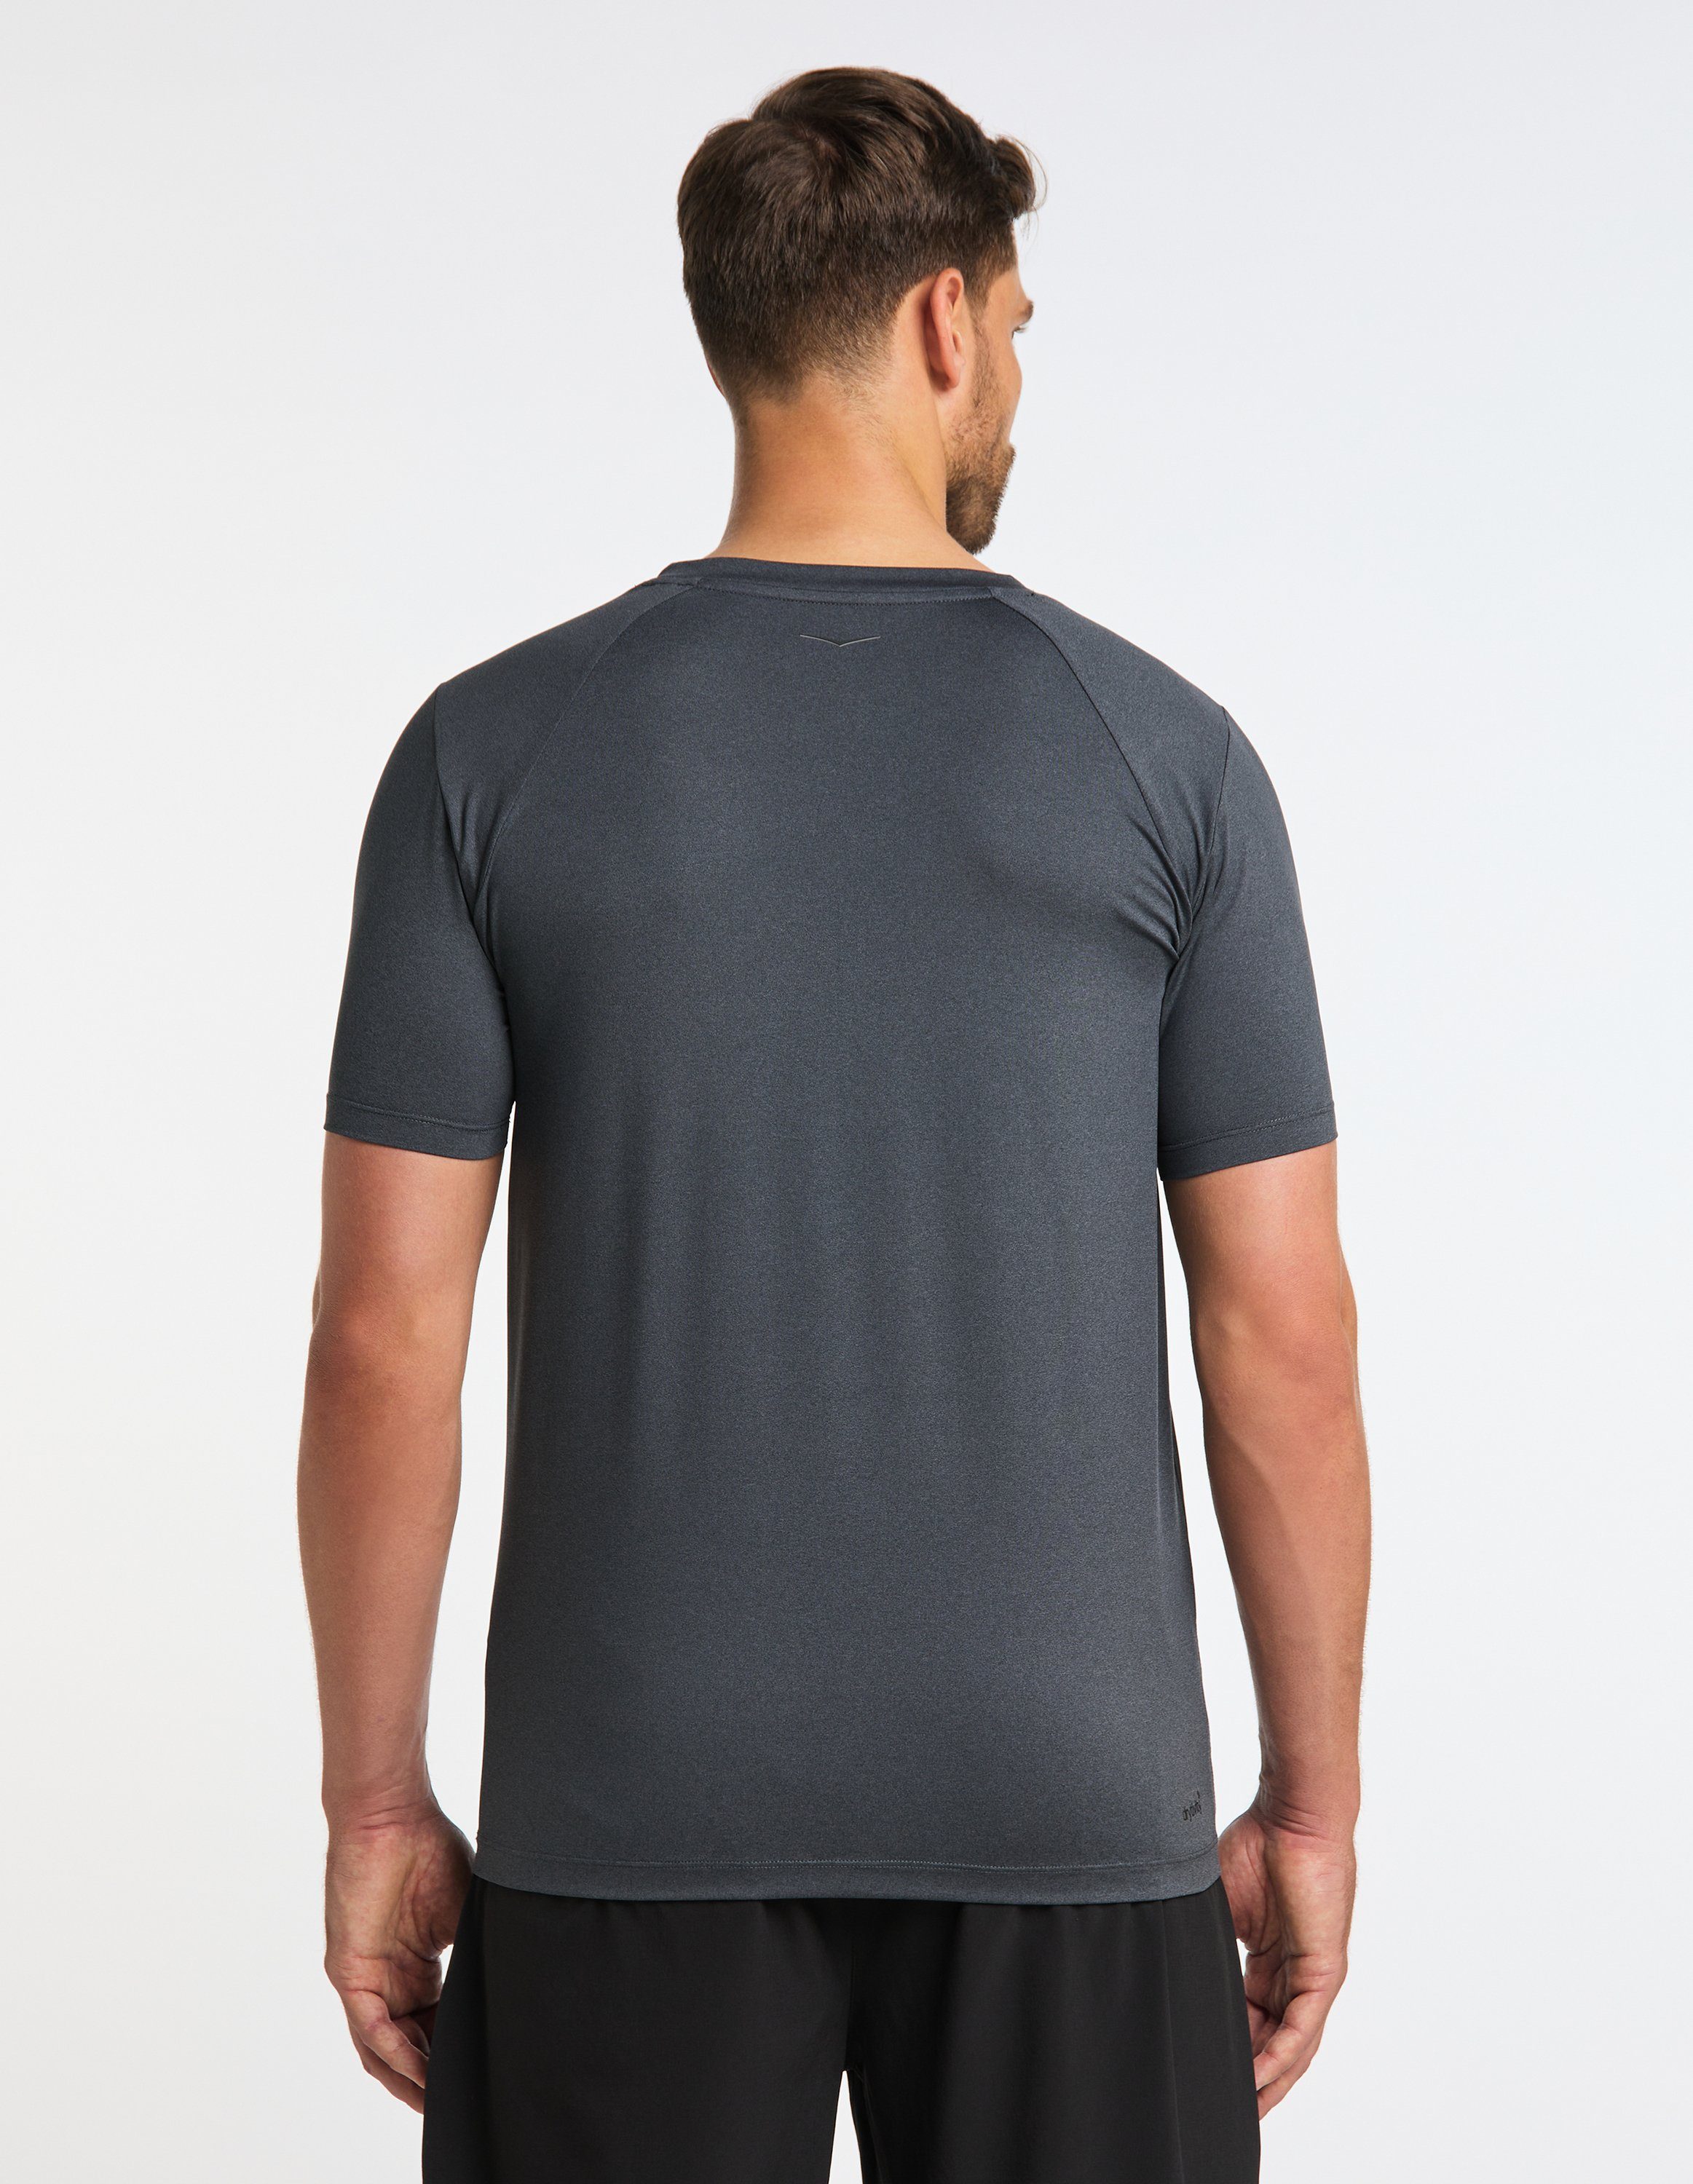 Venice Beach T-Shirt T-Shirt VB carbon melange CLAY grey Men